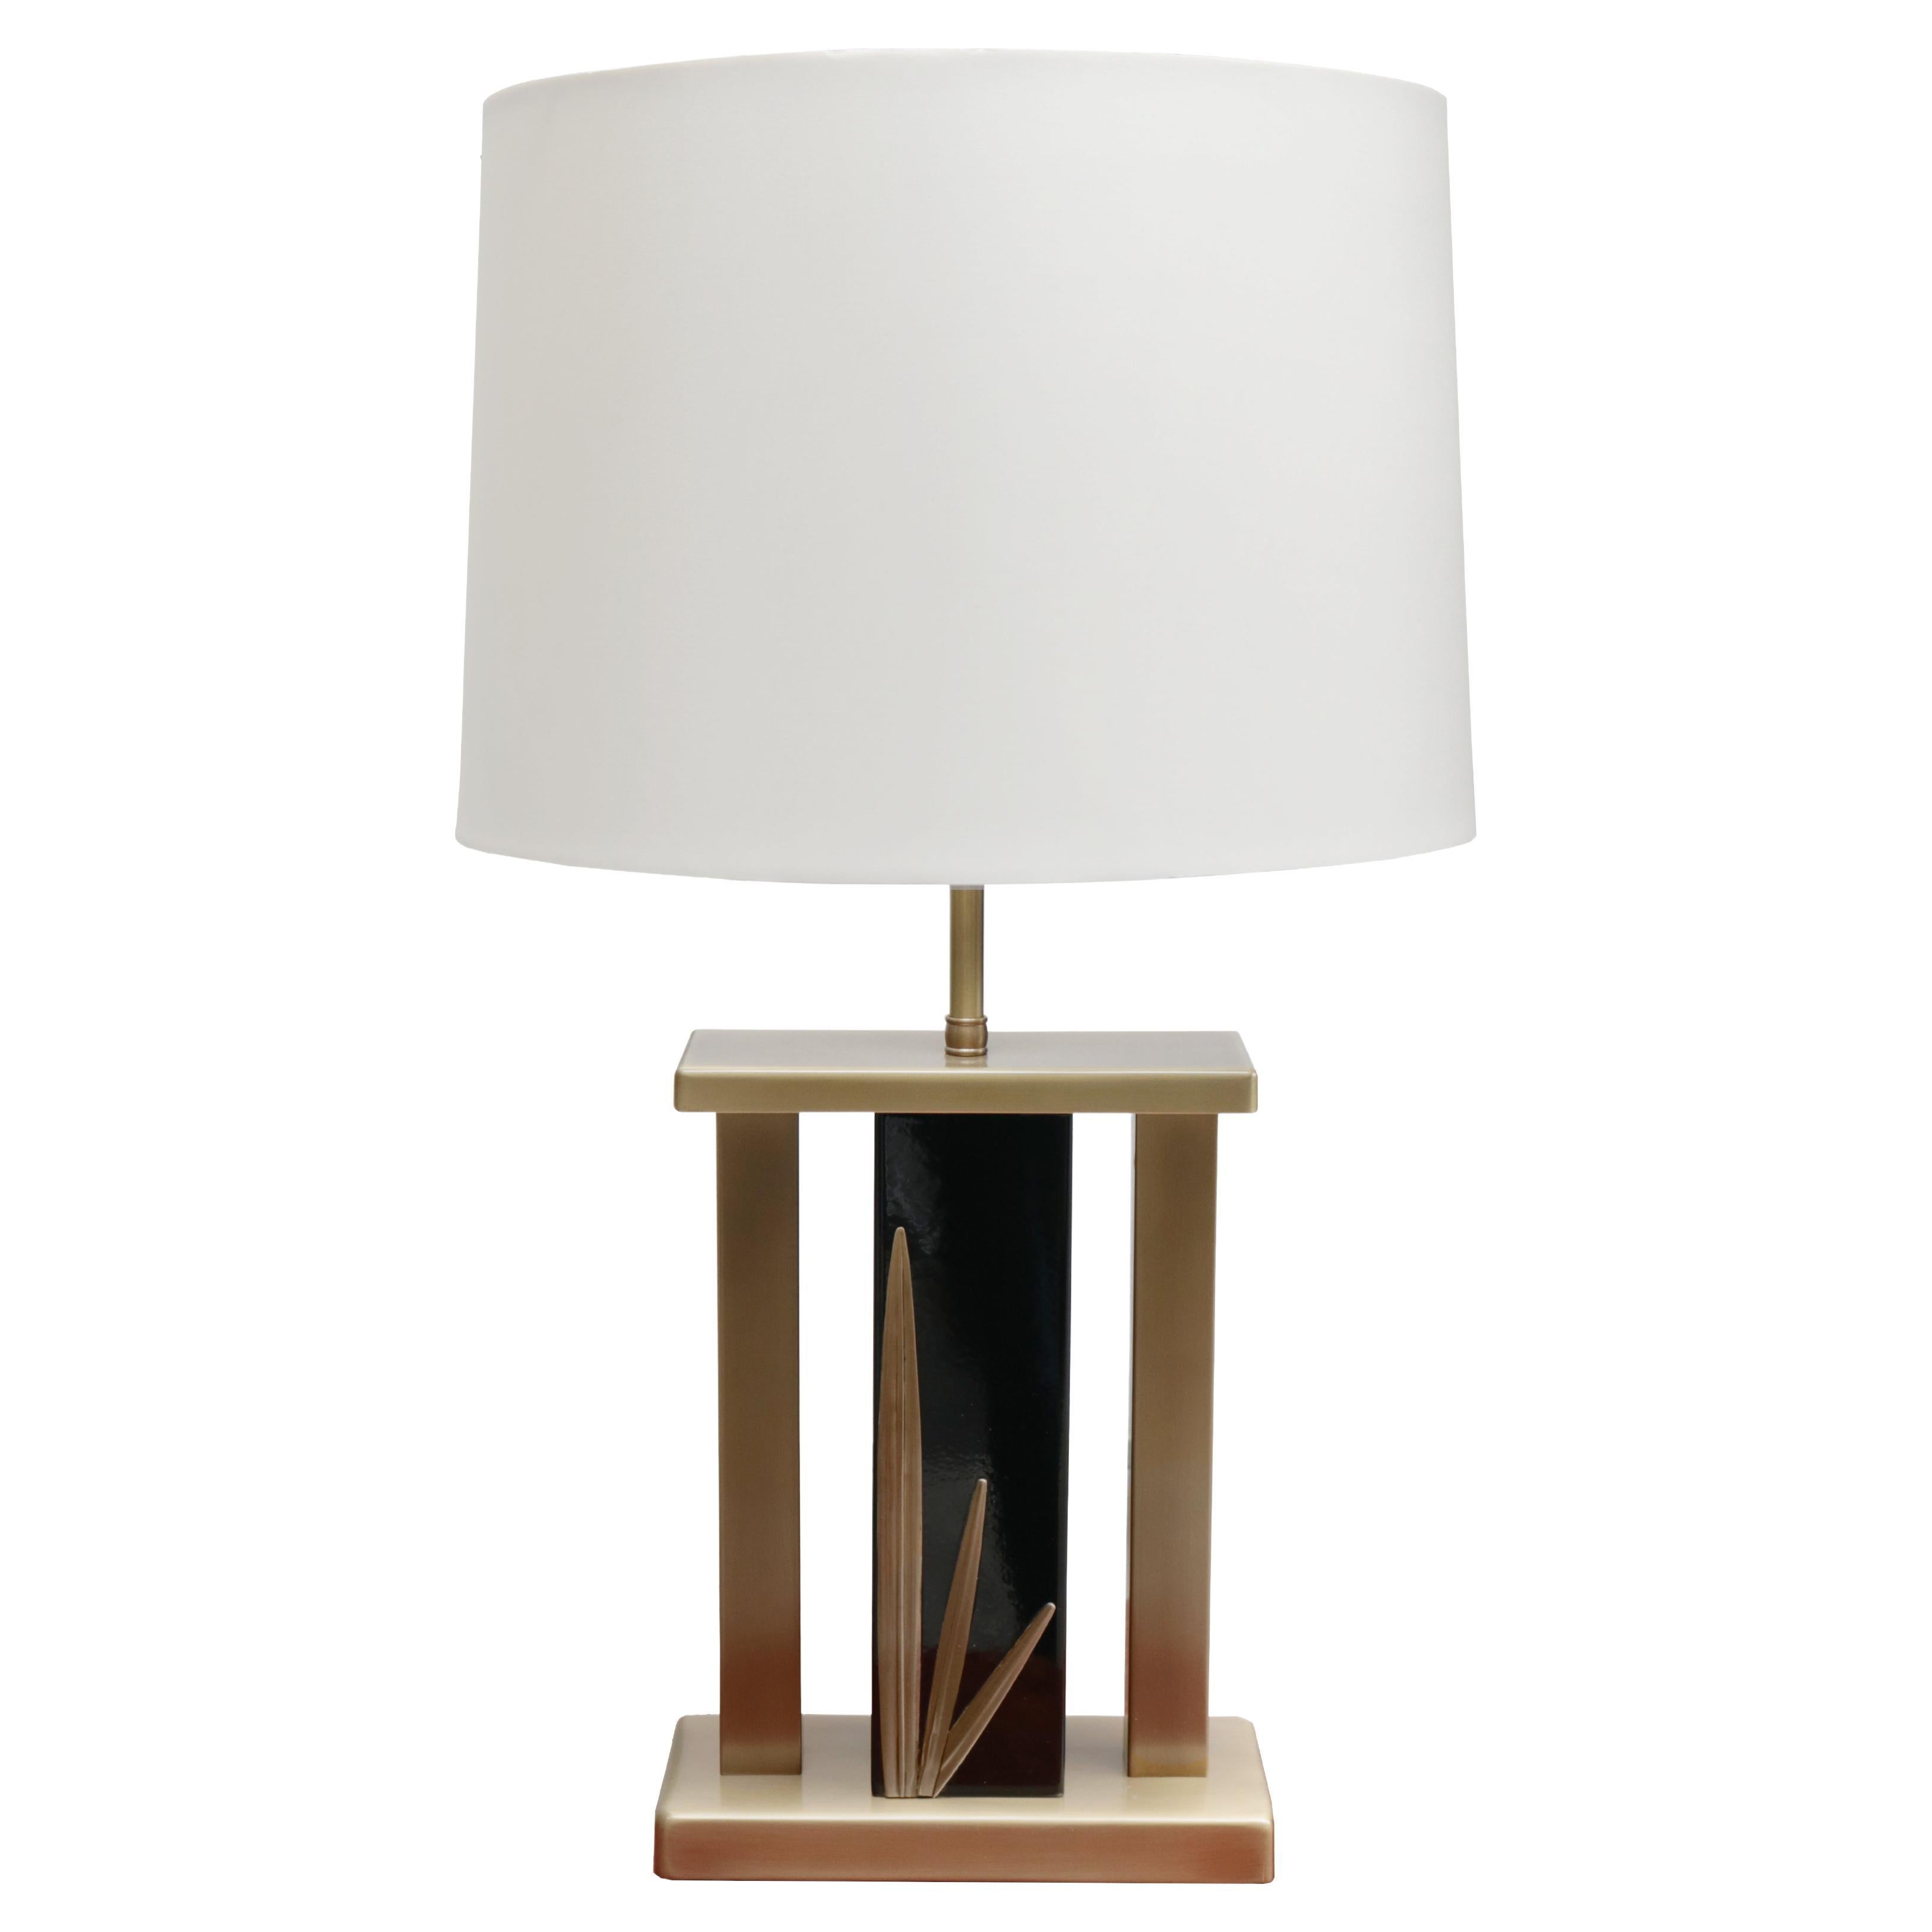 Single Italian Modernist Table Lamp For Sale